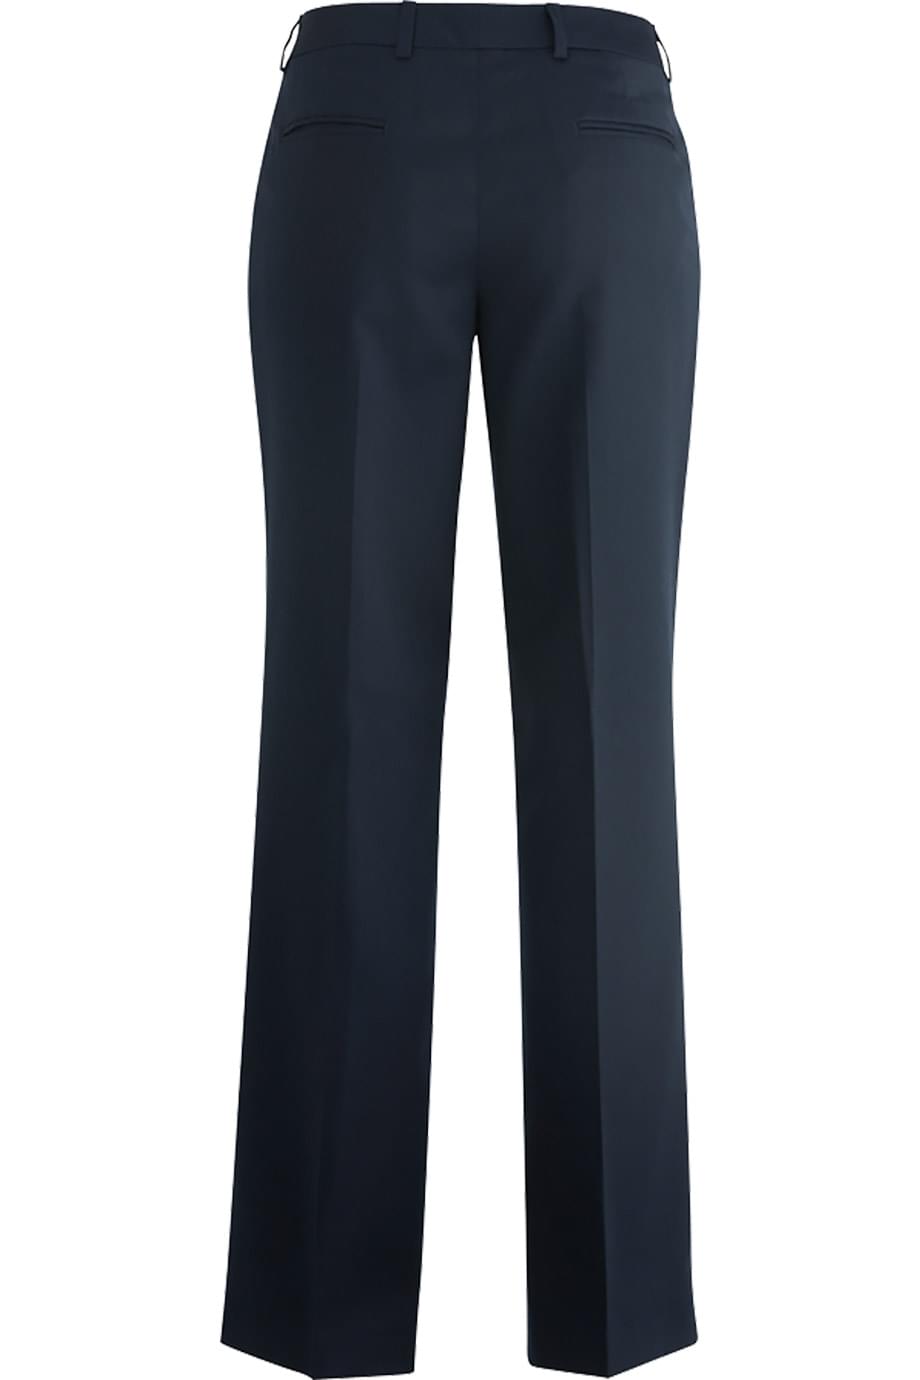 Ophelia Slim Fit Flat Front Ladies Navy Pin Dot Pants - Womens Suit Pants –  Ackermann's Apparel